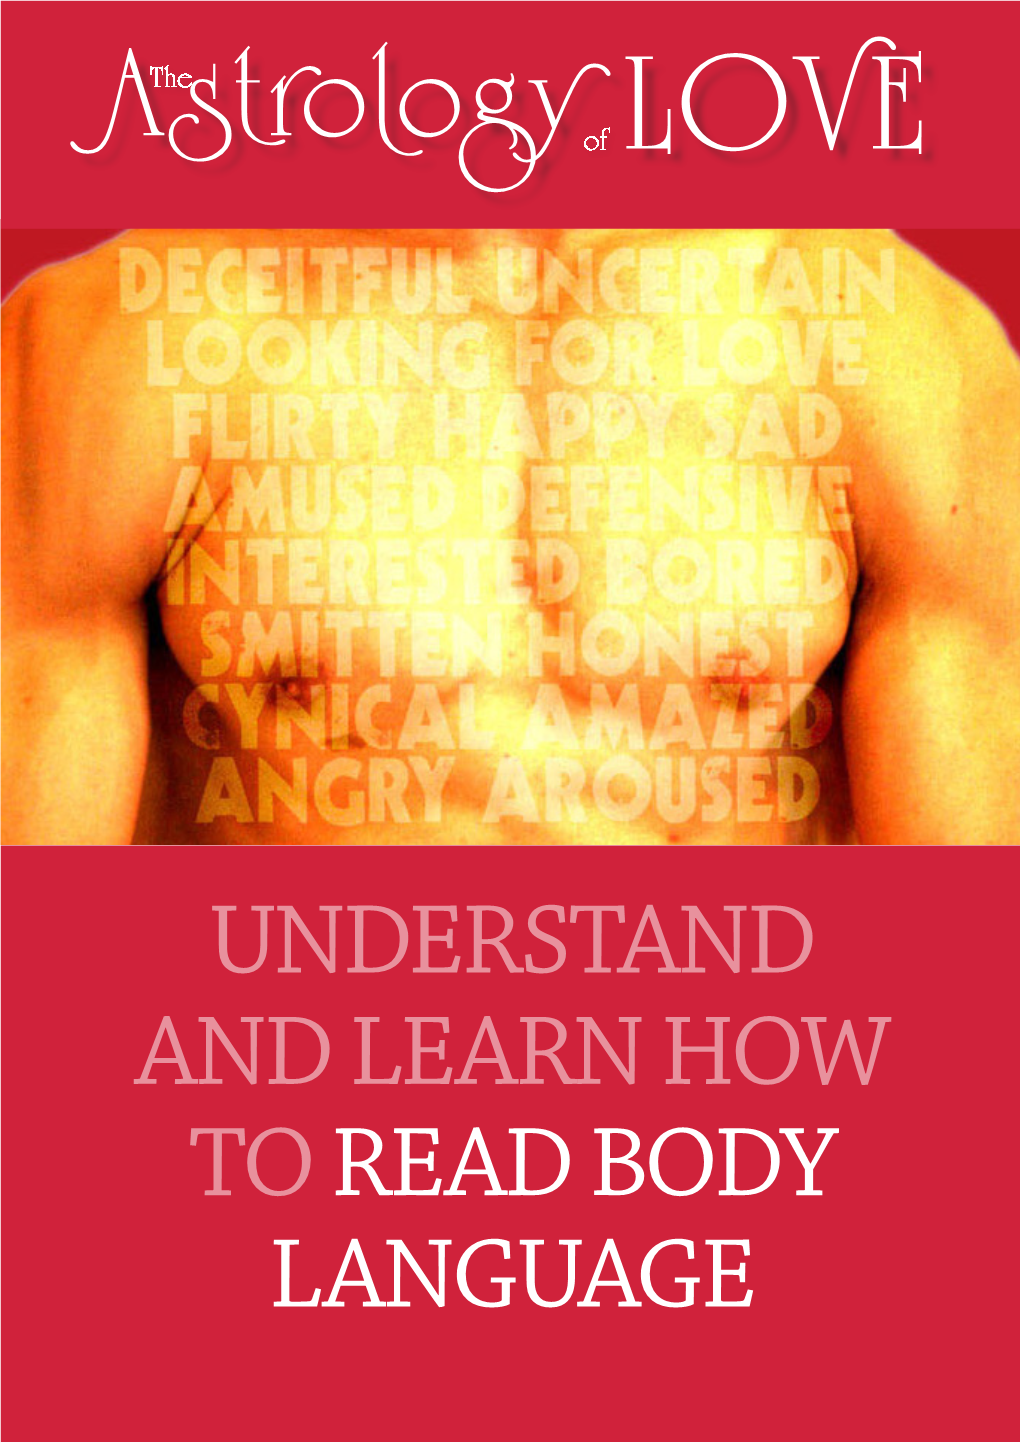 Body Language Chapter 1 – Body Language